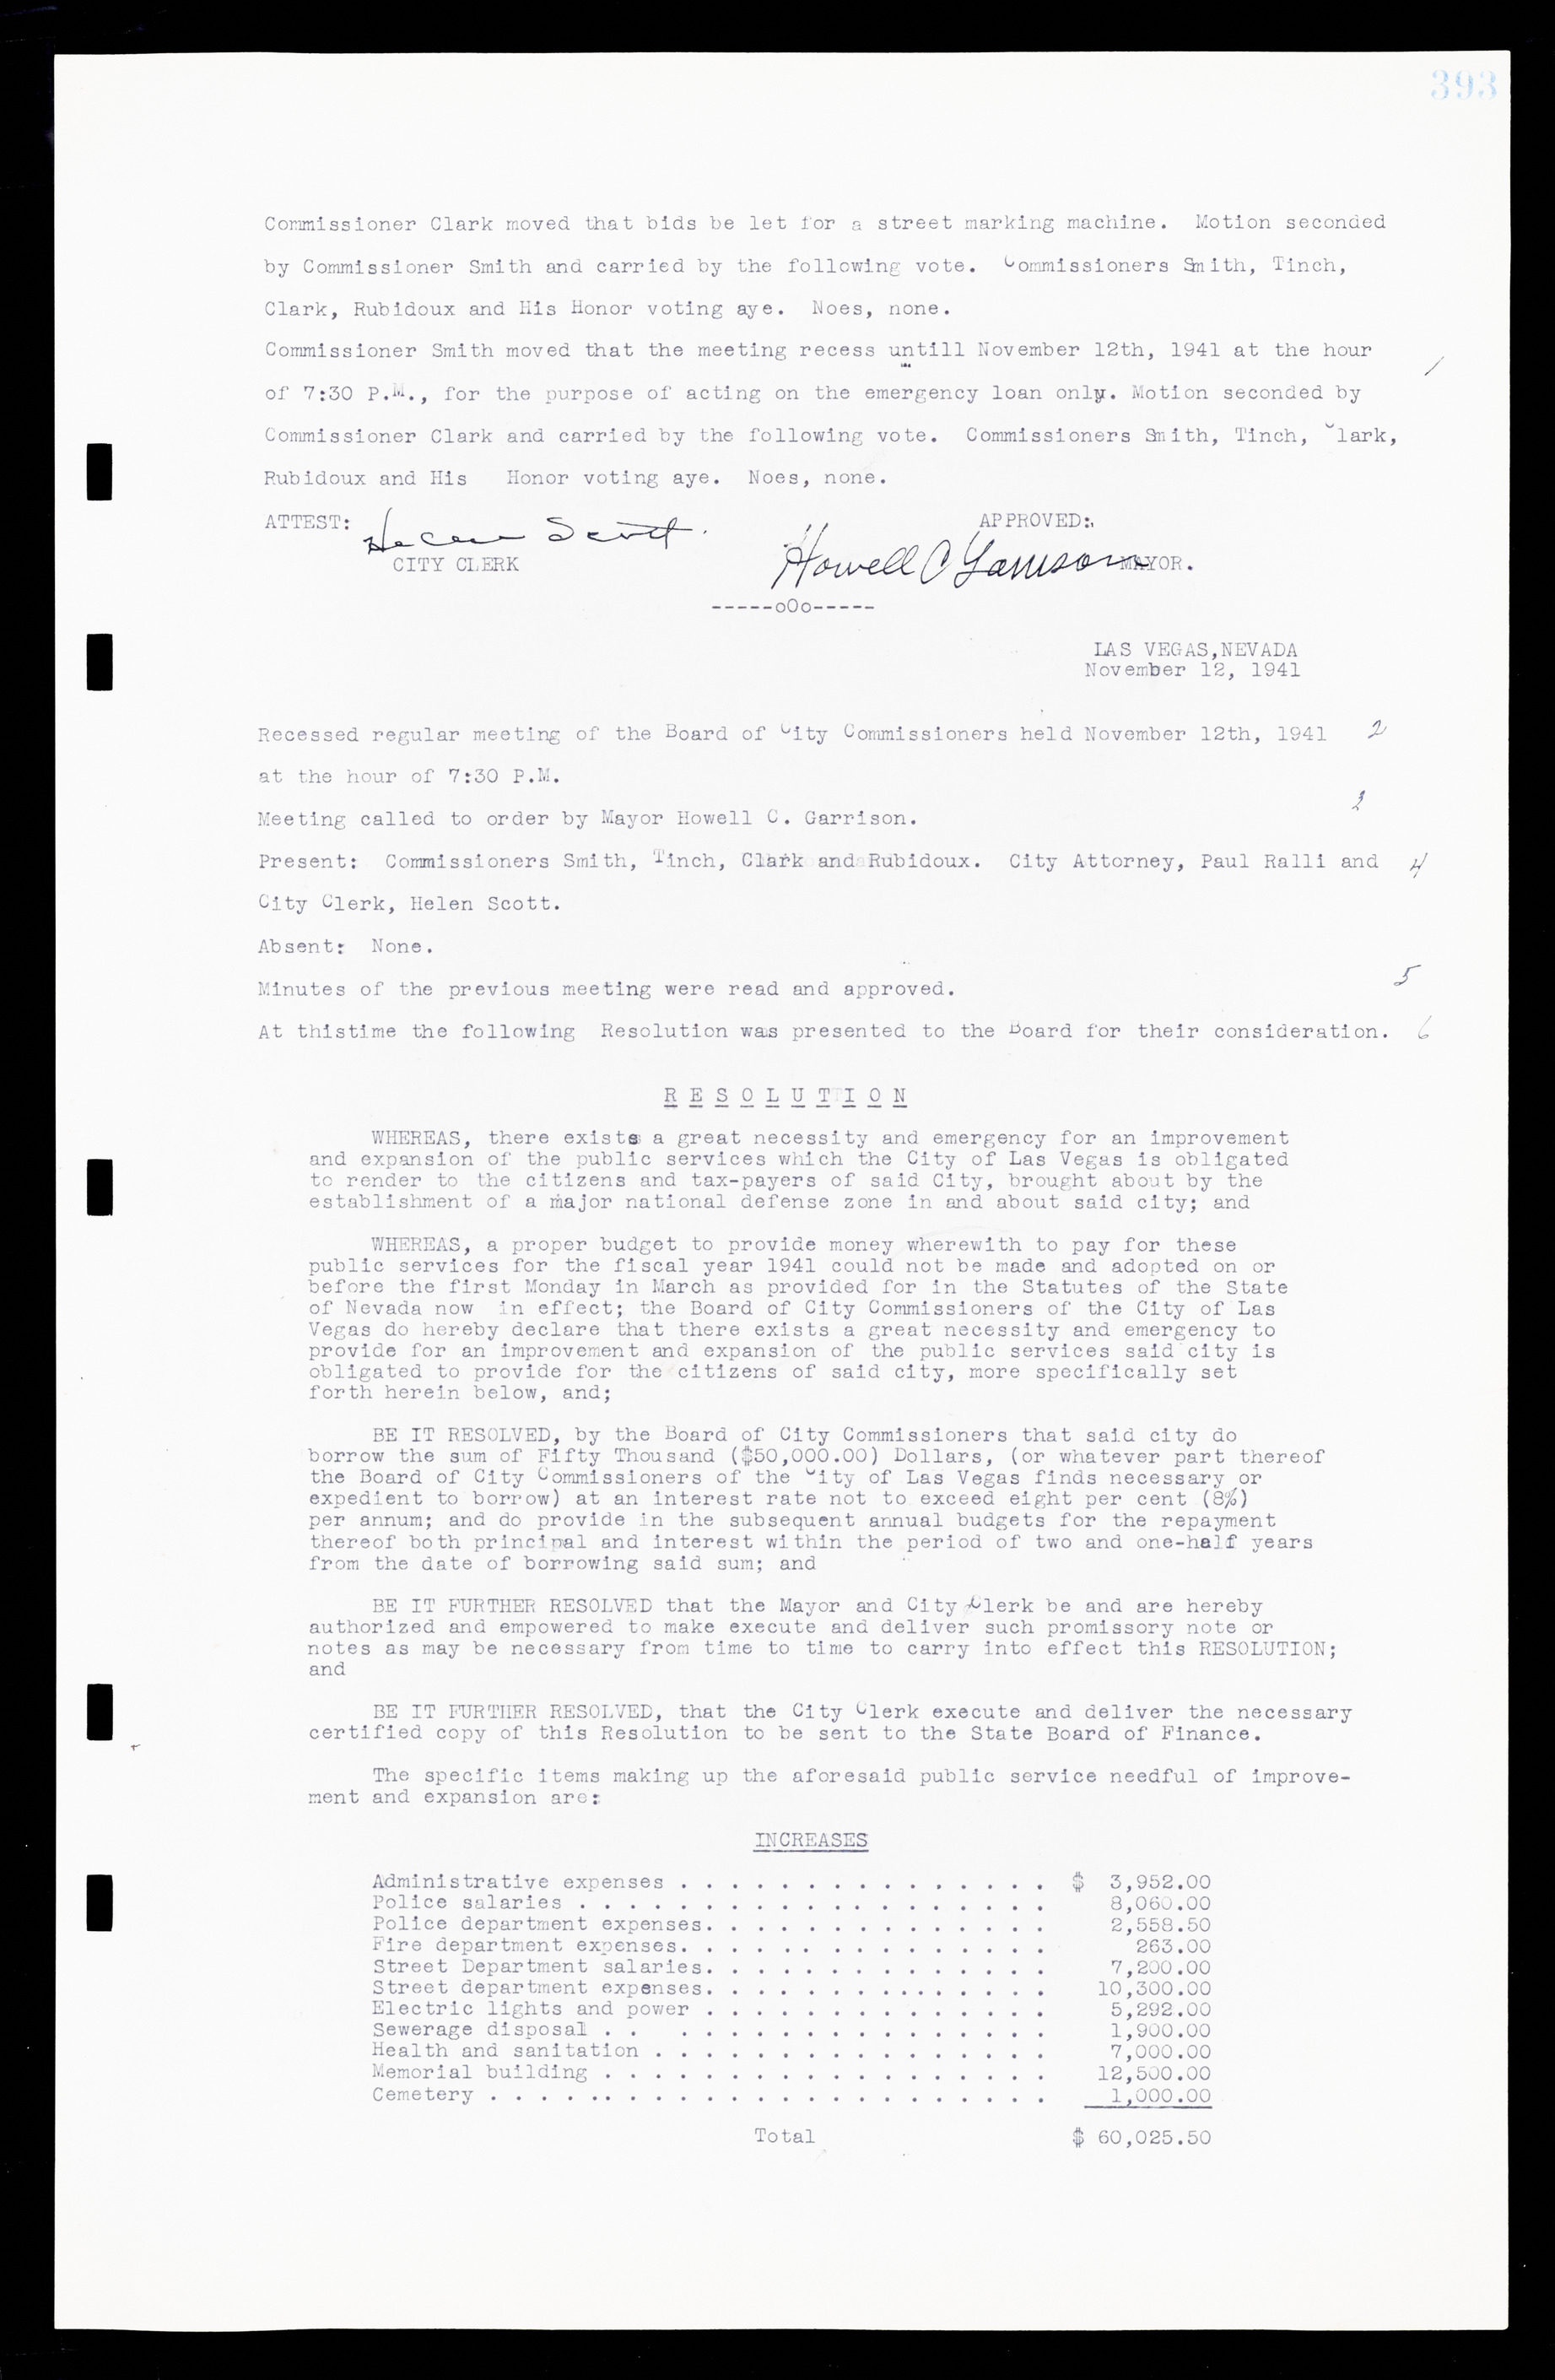 Las Vegas City Commission Minutes, February 17, 1937 to August 4, 1942, lvc000004-419